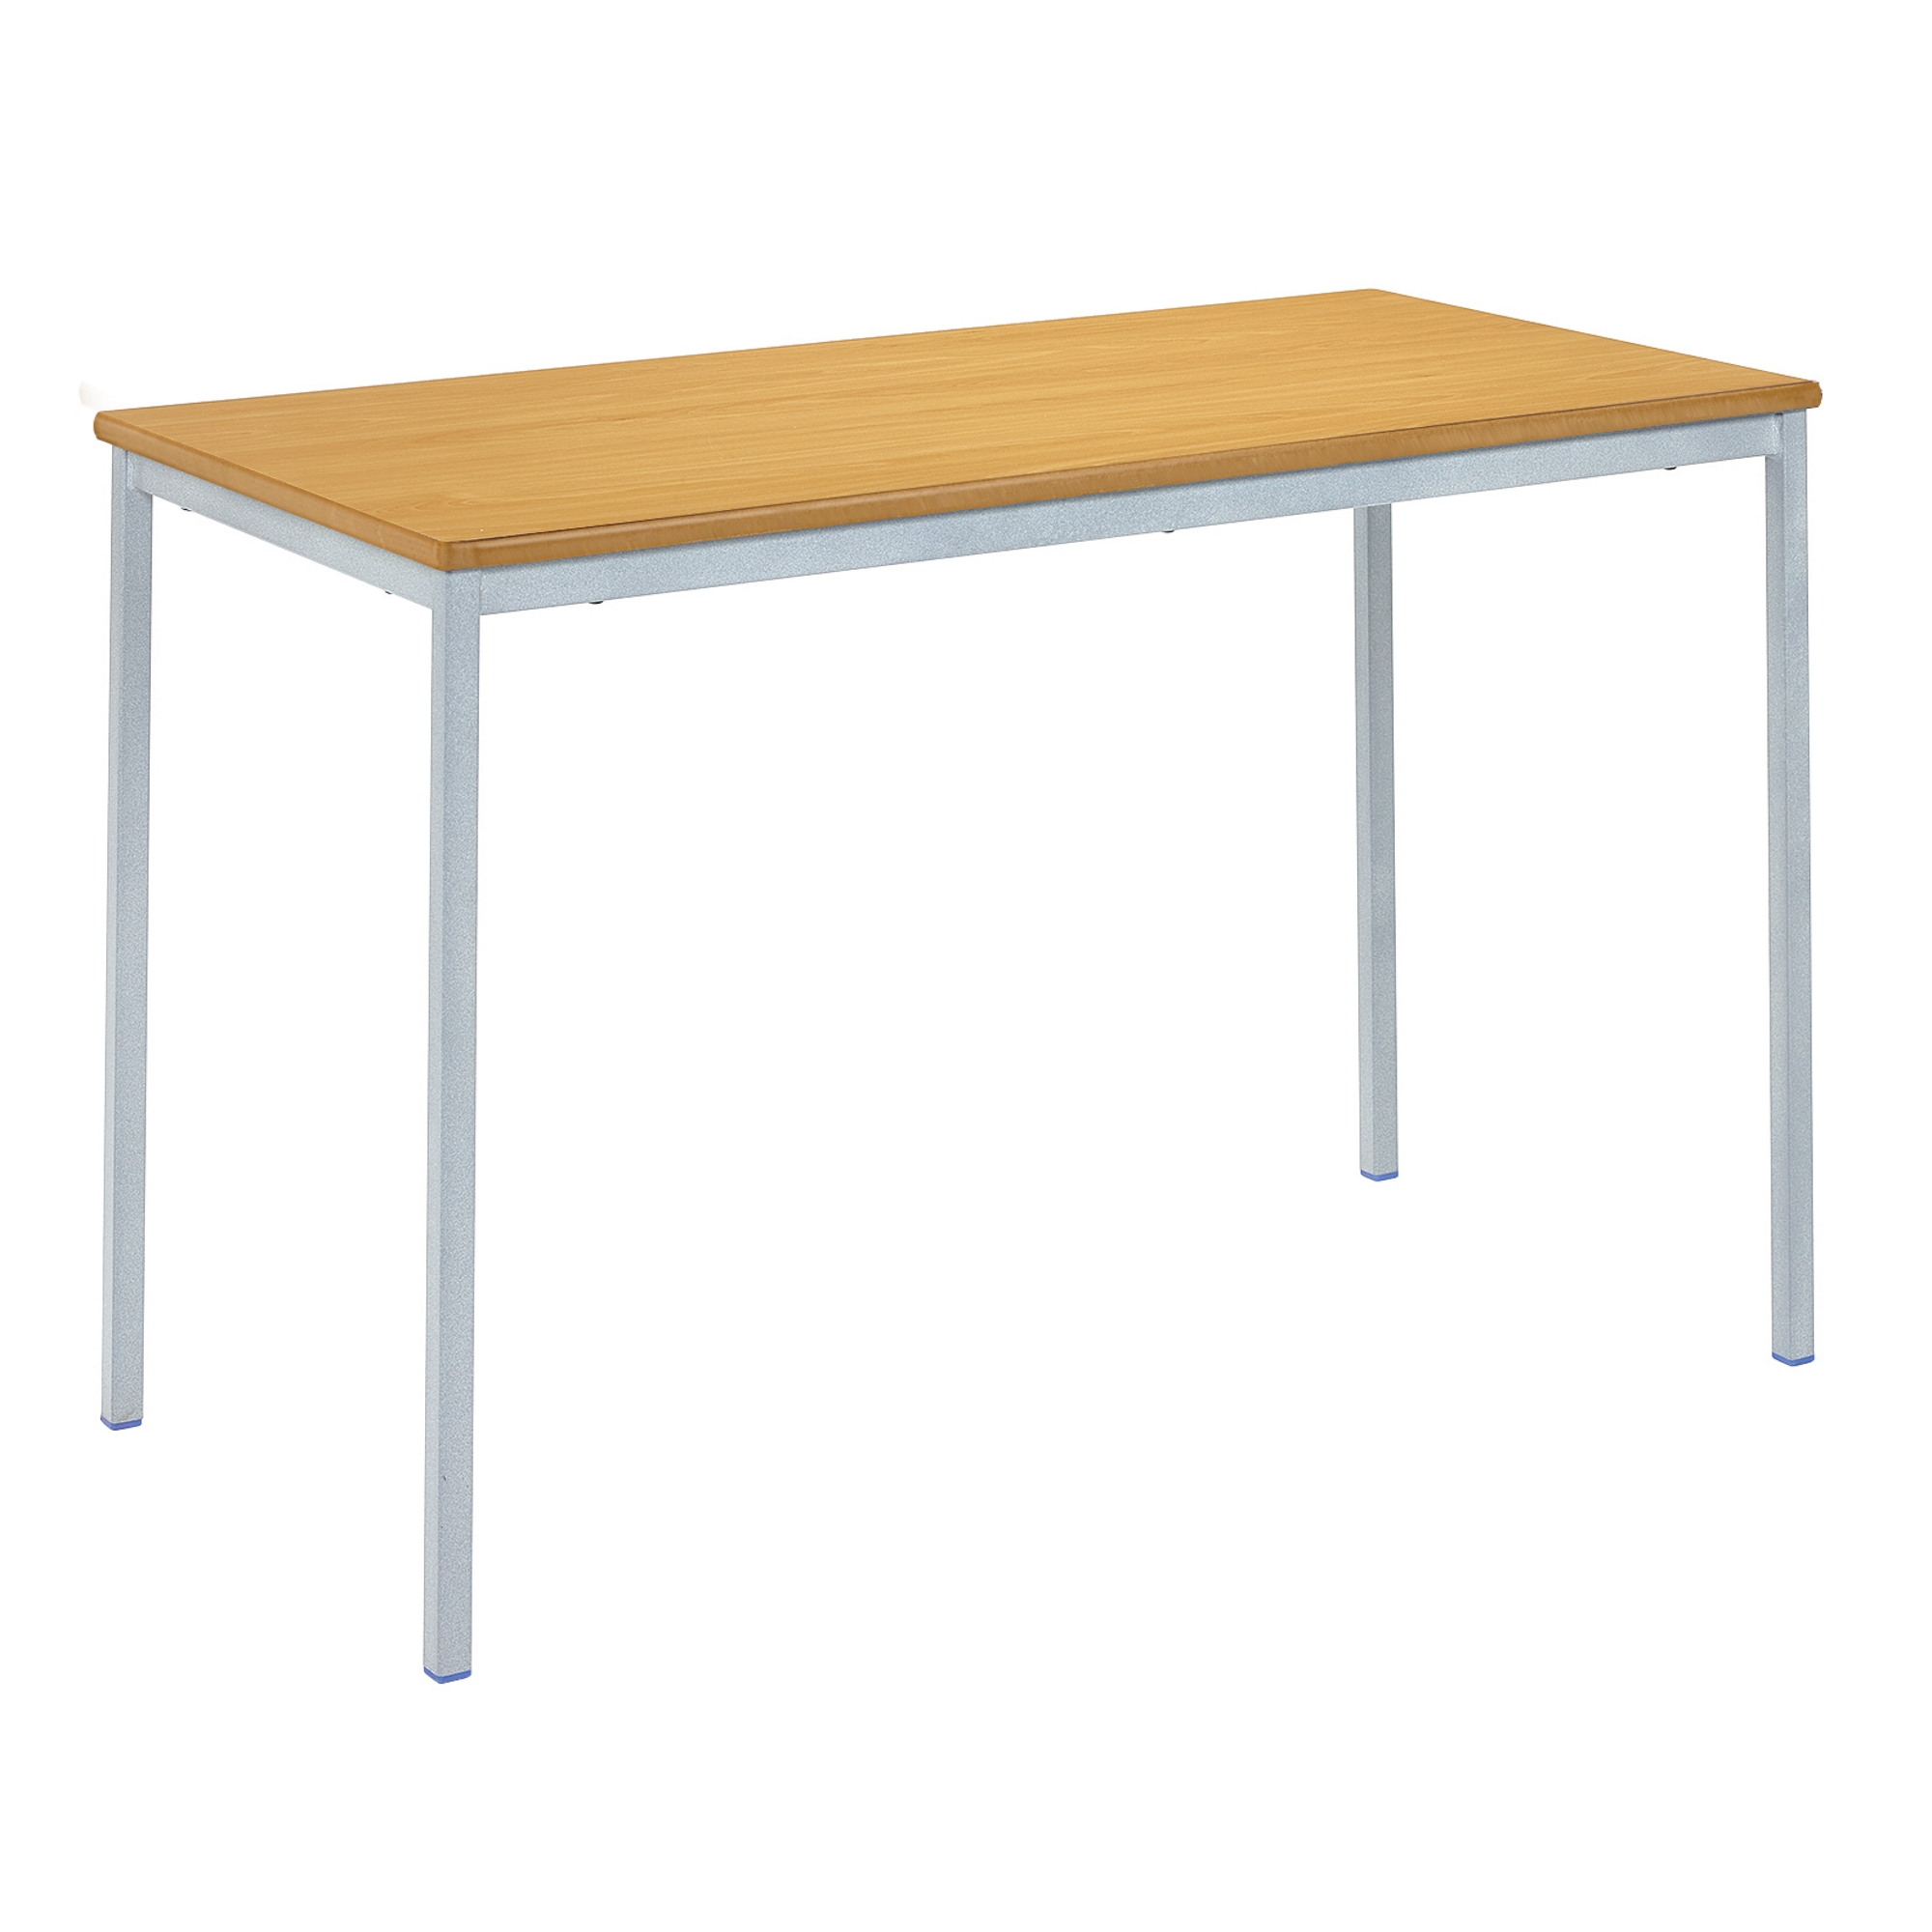 Classmates Rectangular Fully Welded Classroom Table - 1100 x 550 x 710mm - Beech